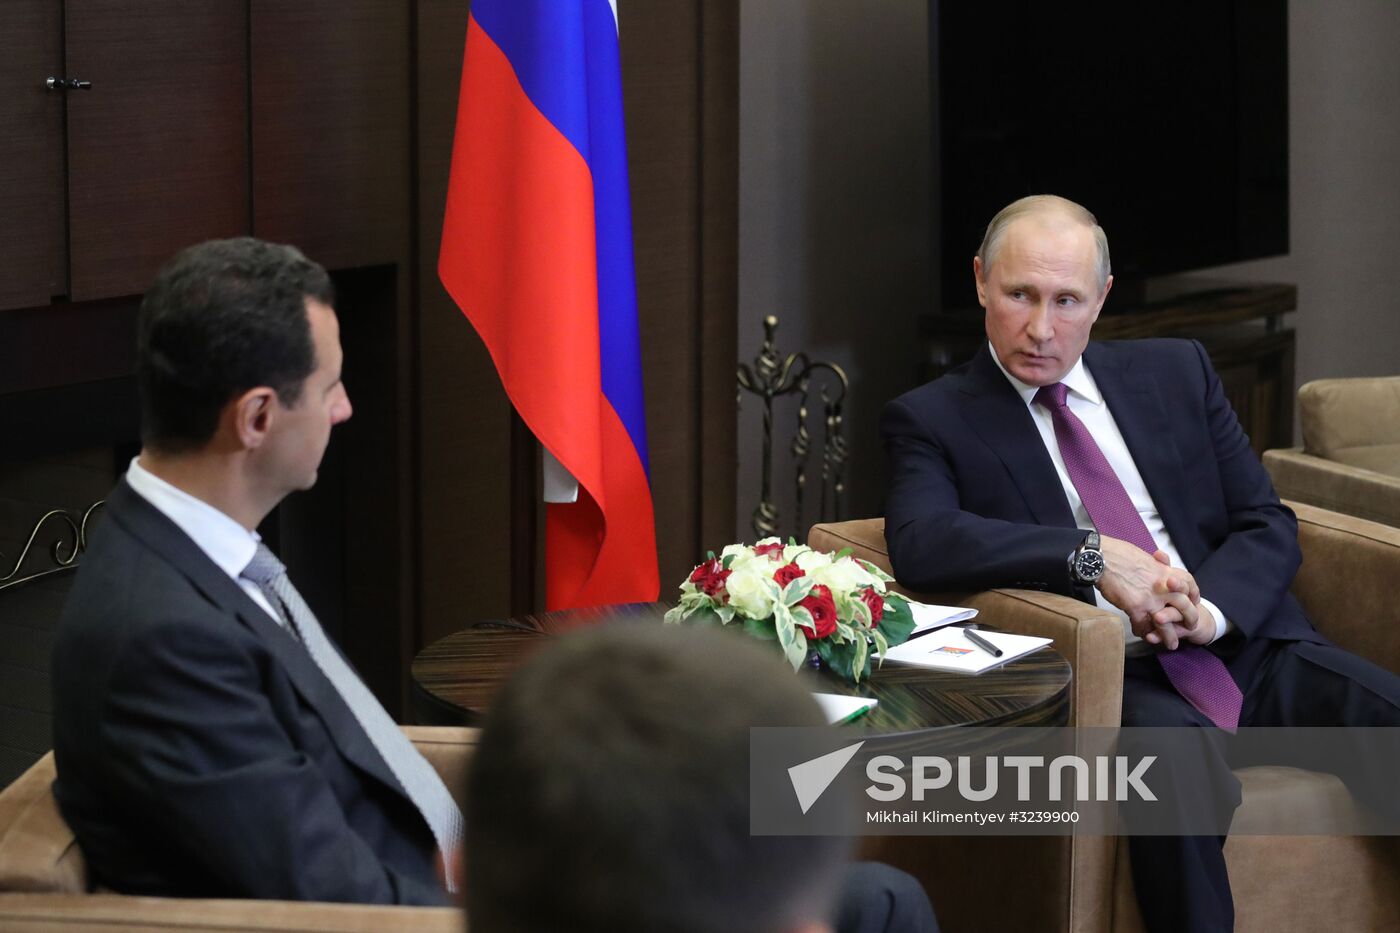 Vladimir Putin meets with Syrian President Bashar Al-Assad